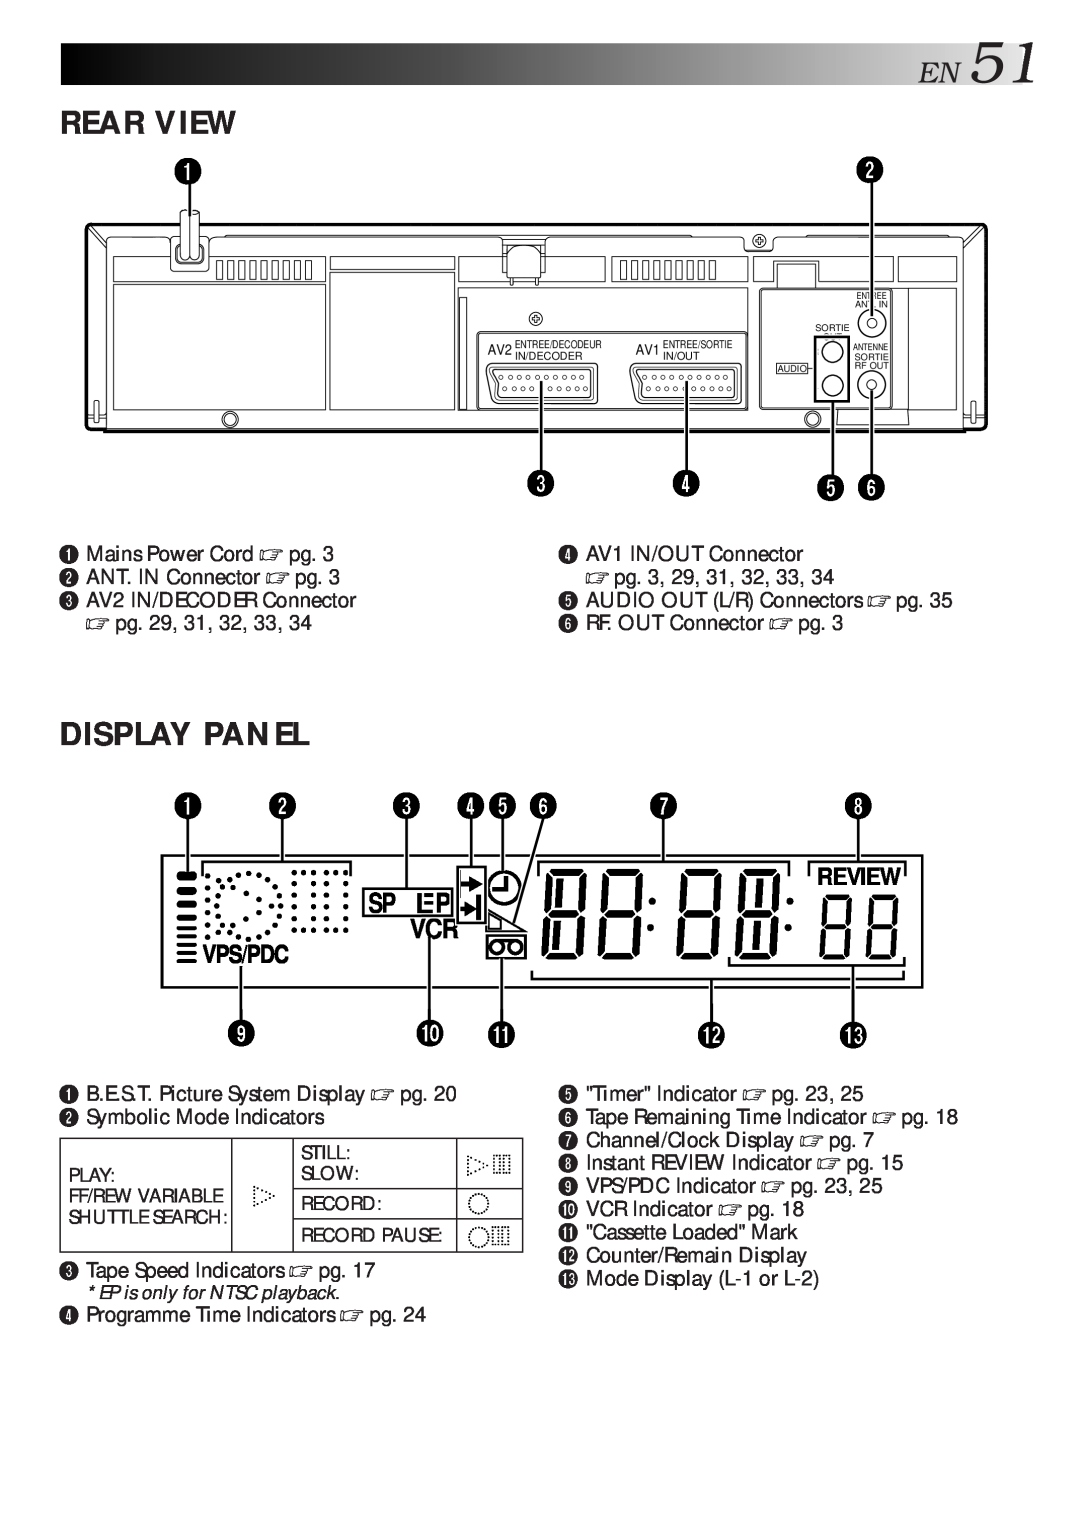 JVC HR-J713EU, HR-J712EU specifications Rear View, Display Panel, EN51, Vps/Pdc, Review 